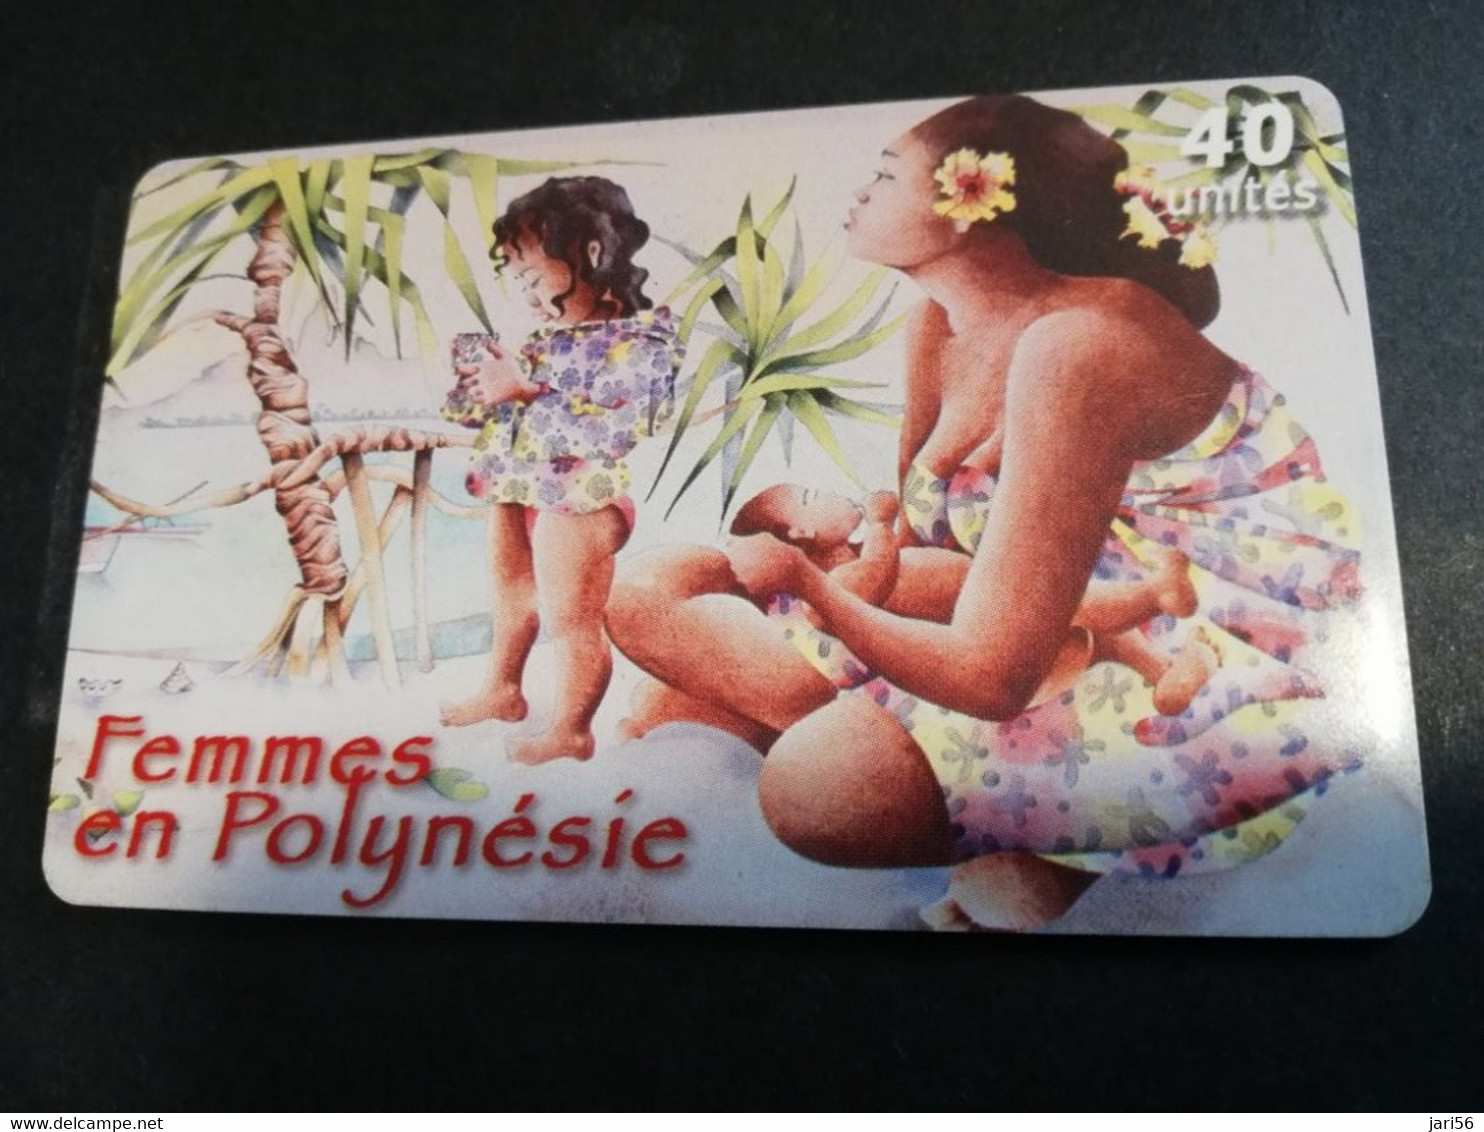 POLINESIA FRANCAISE  CHIPCARD  40 UNITS  FEMMES EN POLYNESIE                   **4941** - Polynésie Française